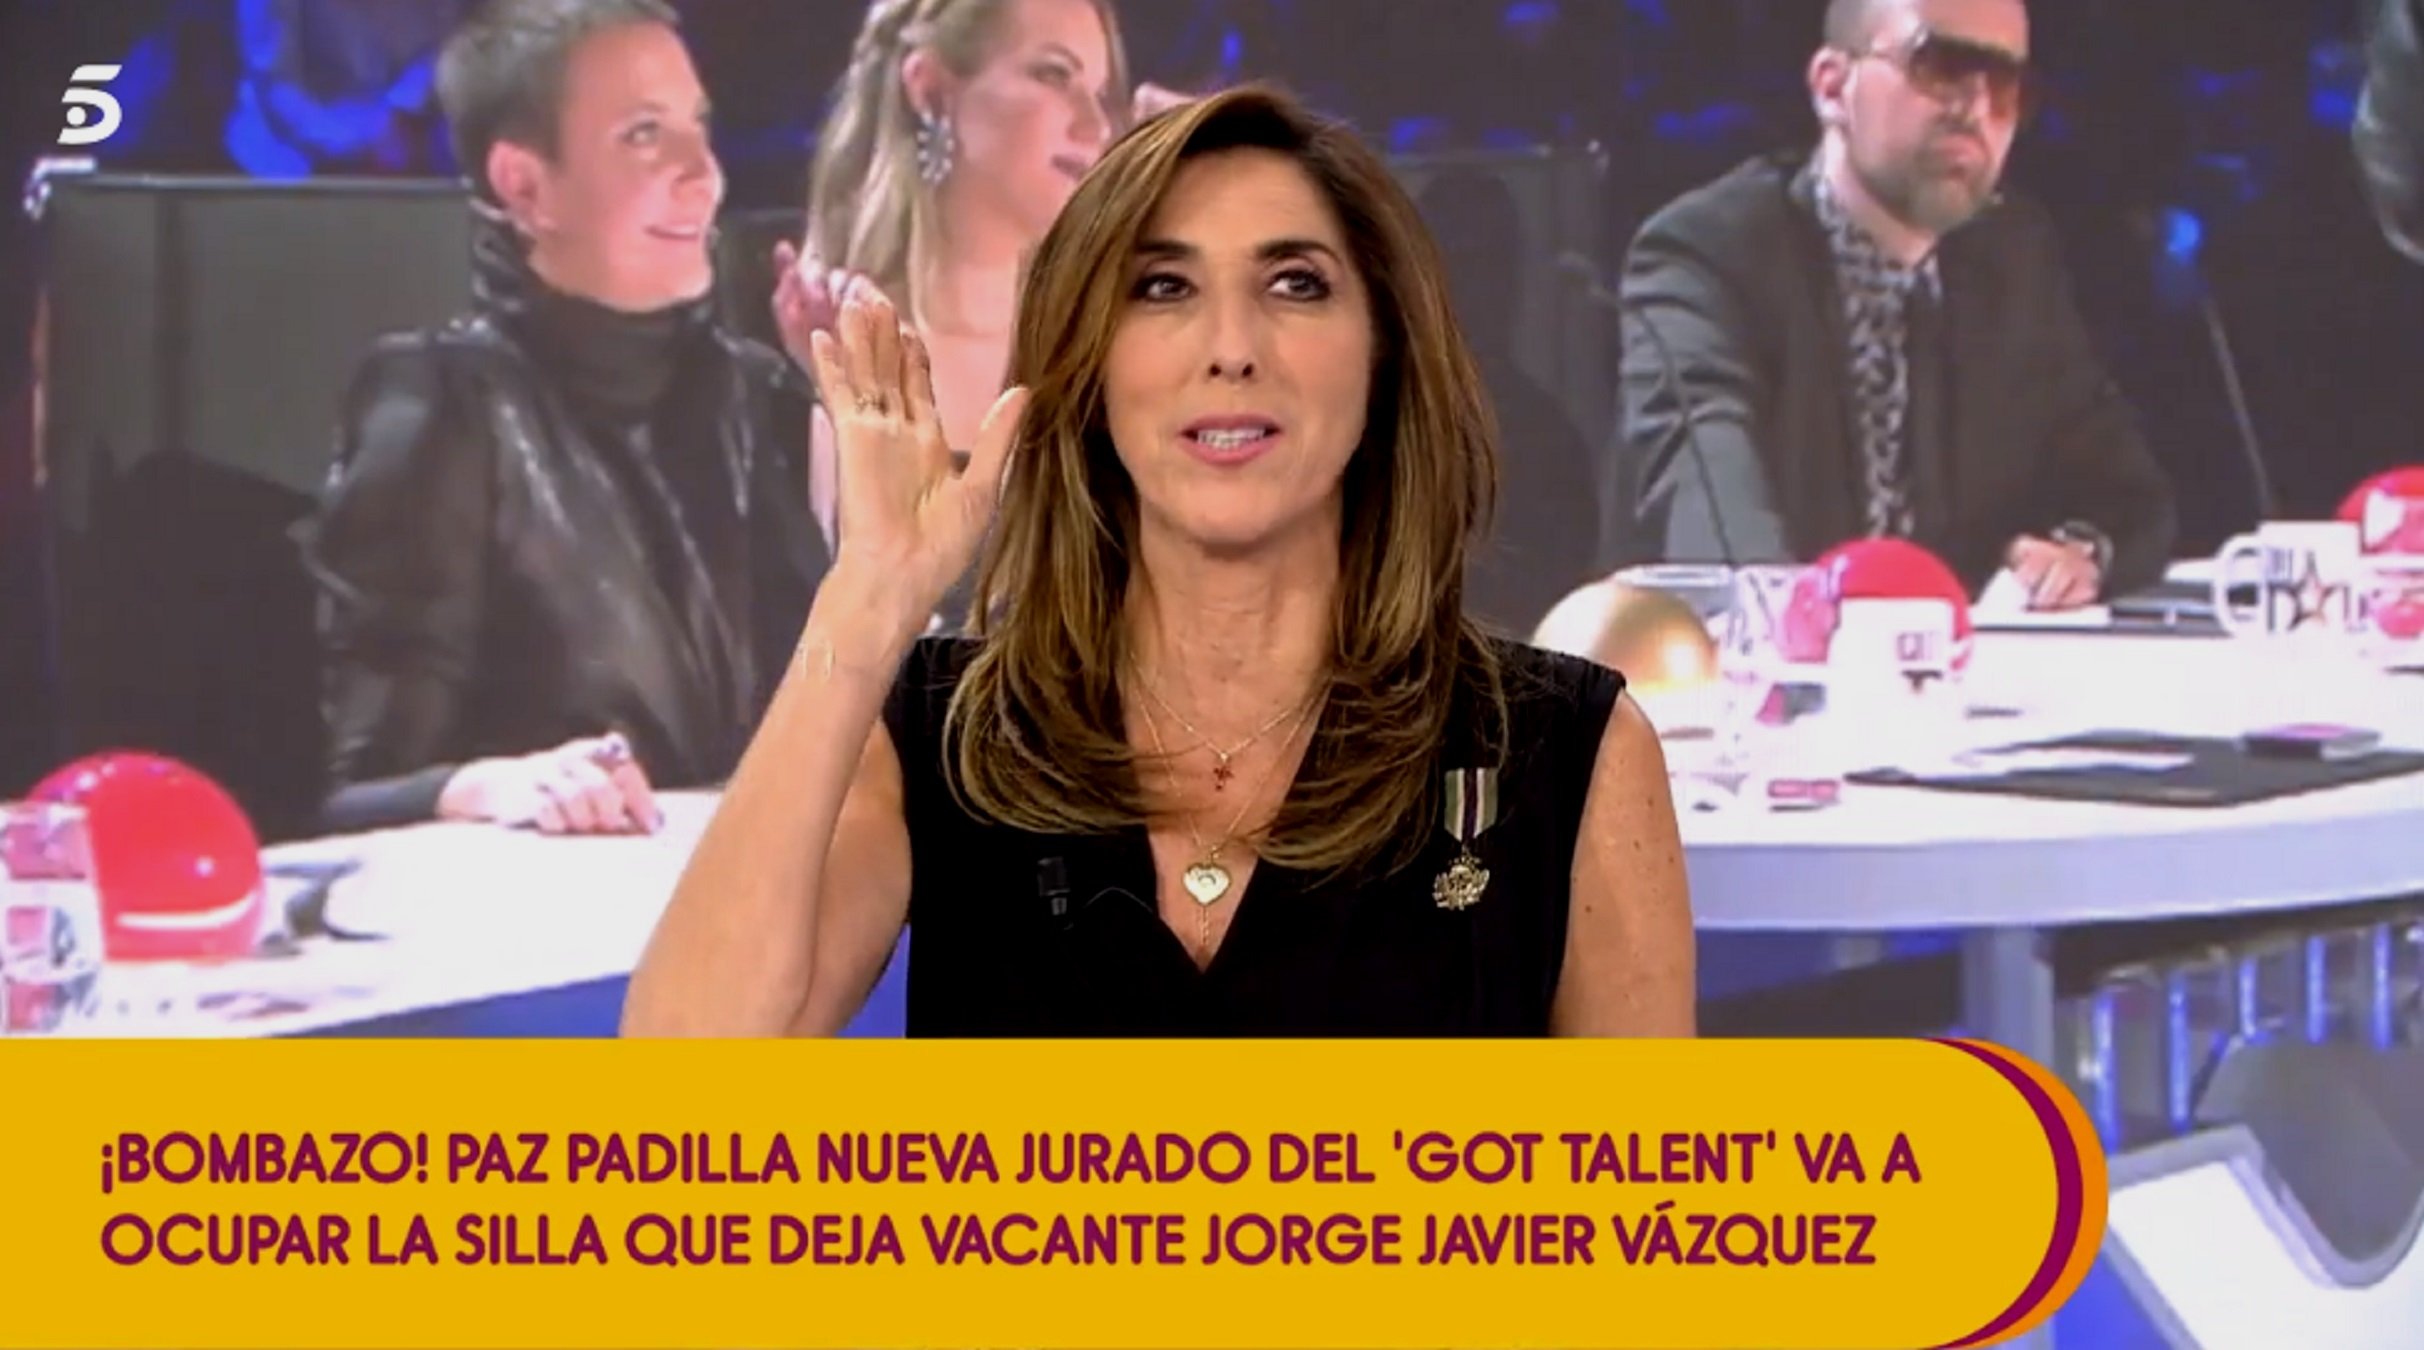 Paz Padilla le quita el sitio a Jorge Javier en 'Got Talent'